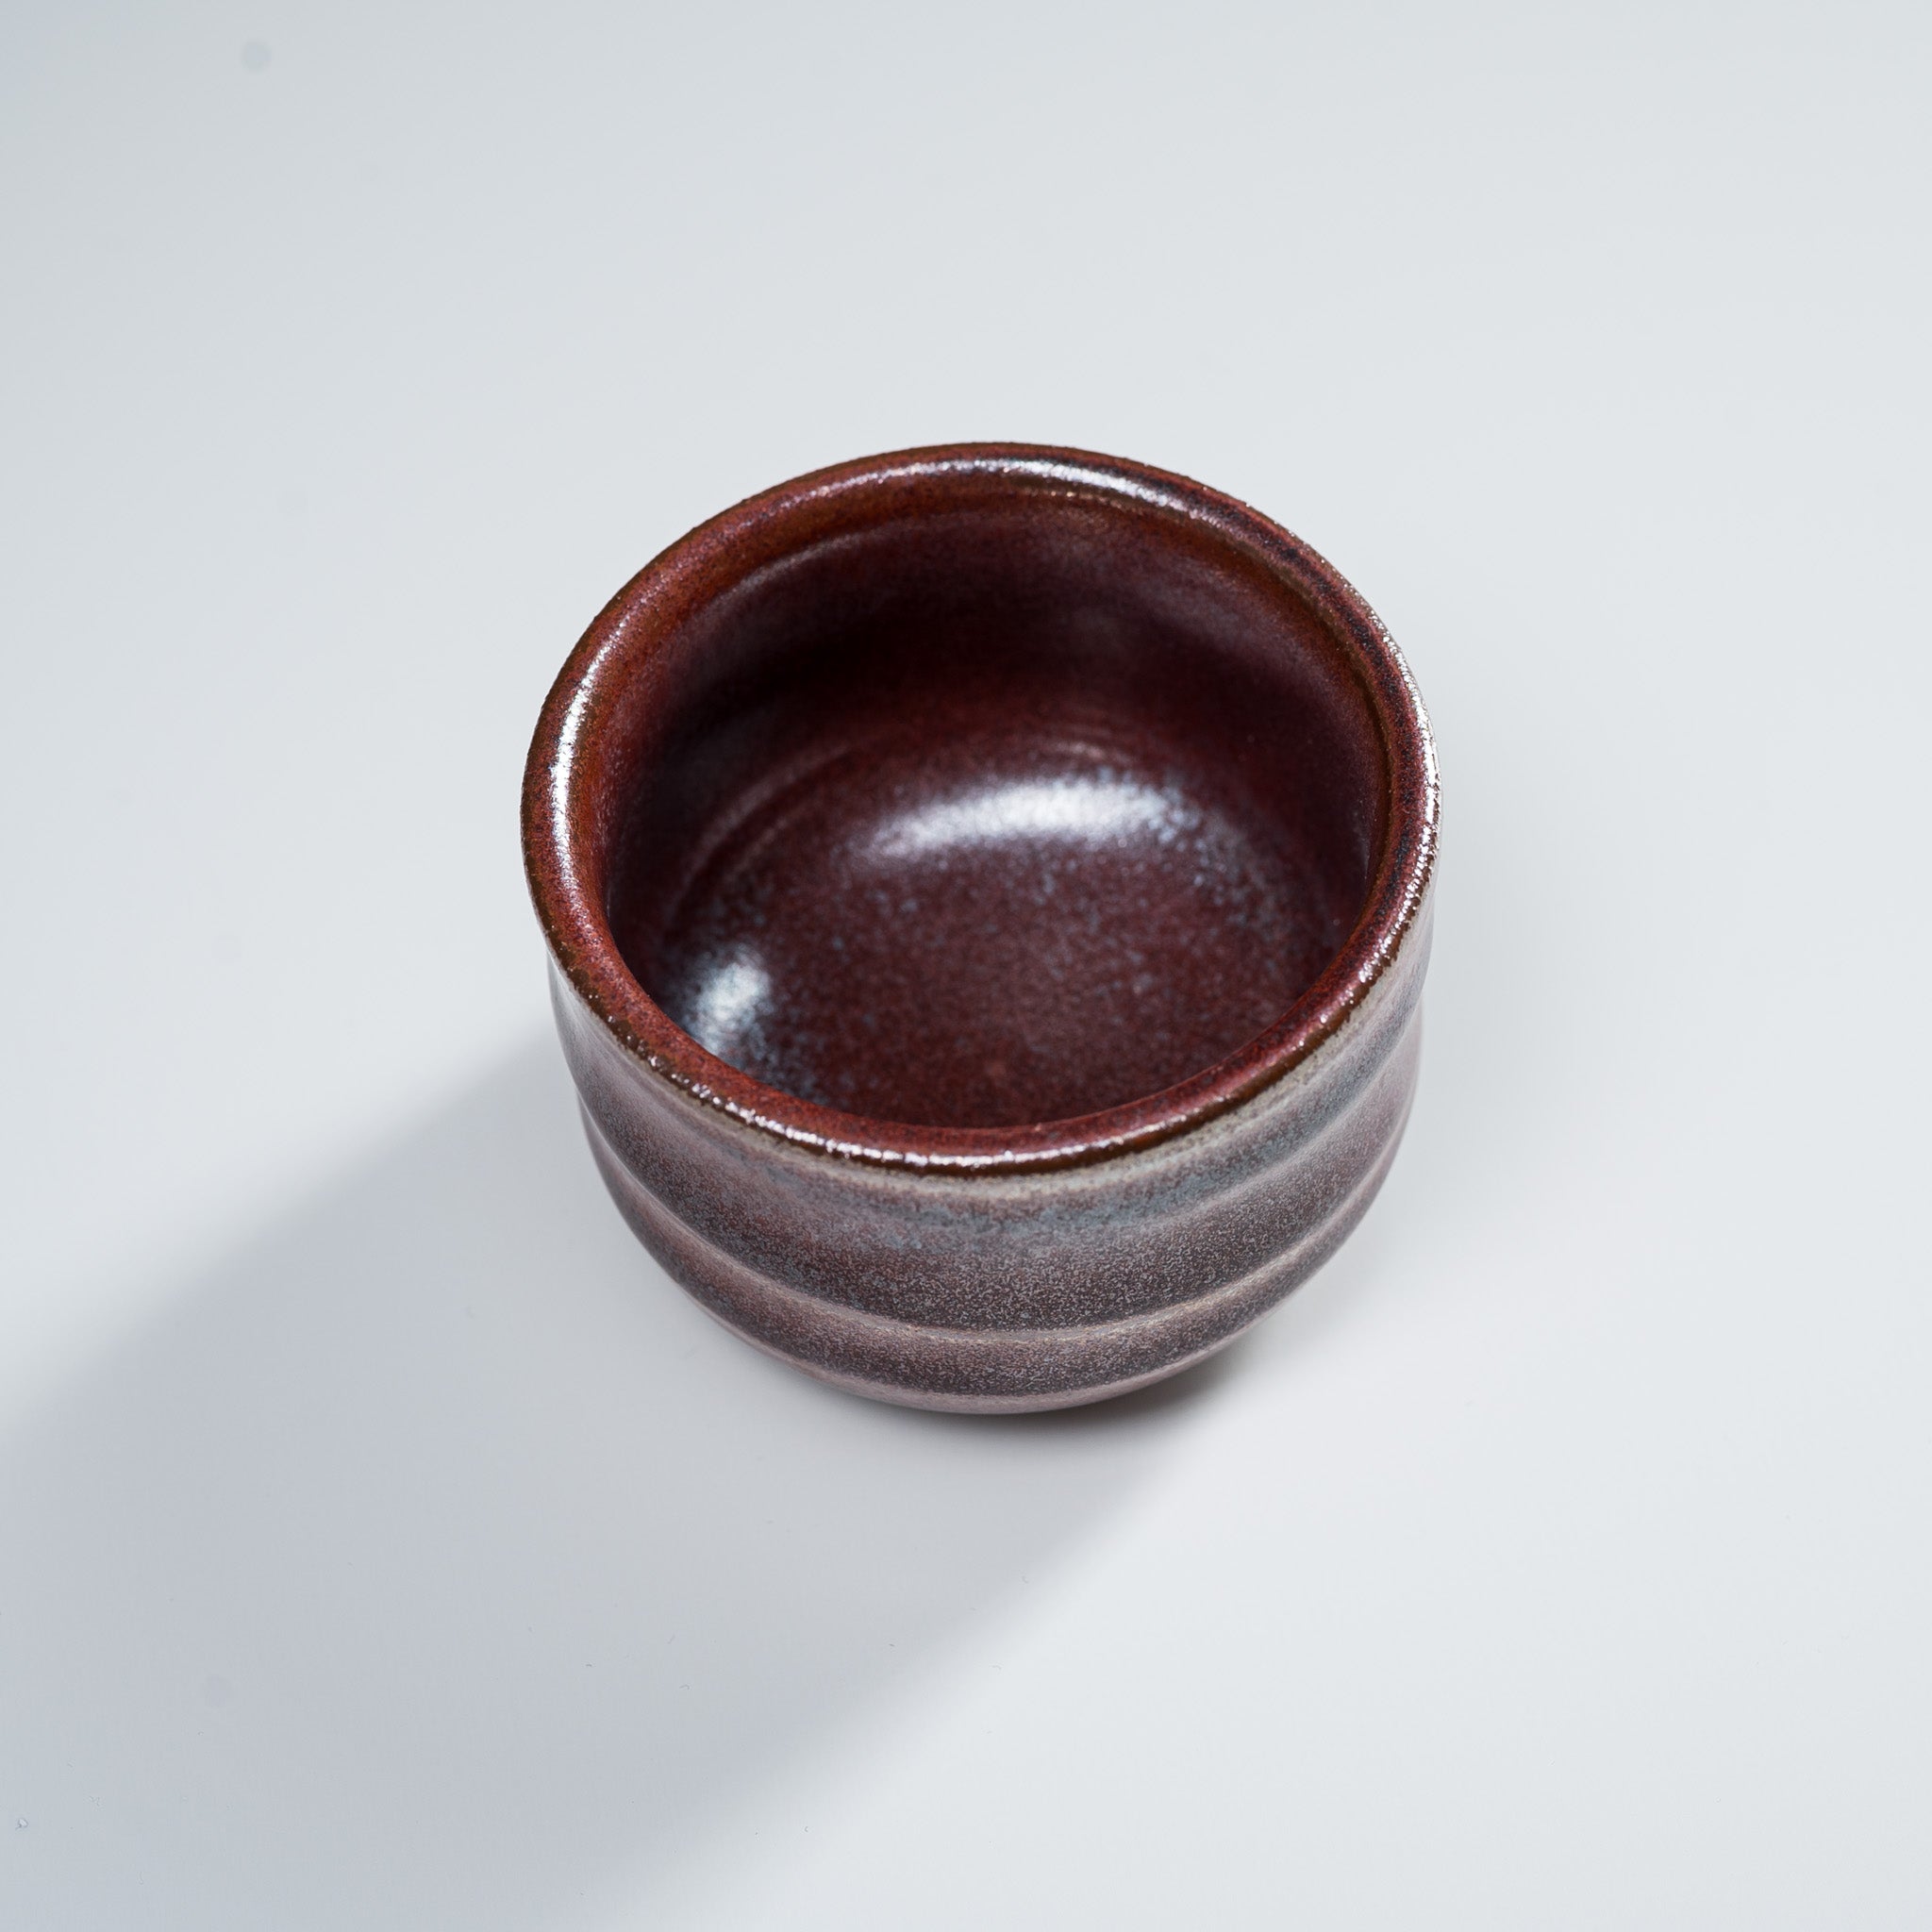 Mino ware Pottery Sake Cup / Teacup - Wine Red / 美濃焼き ぐい呑み